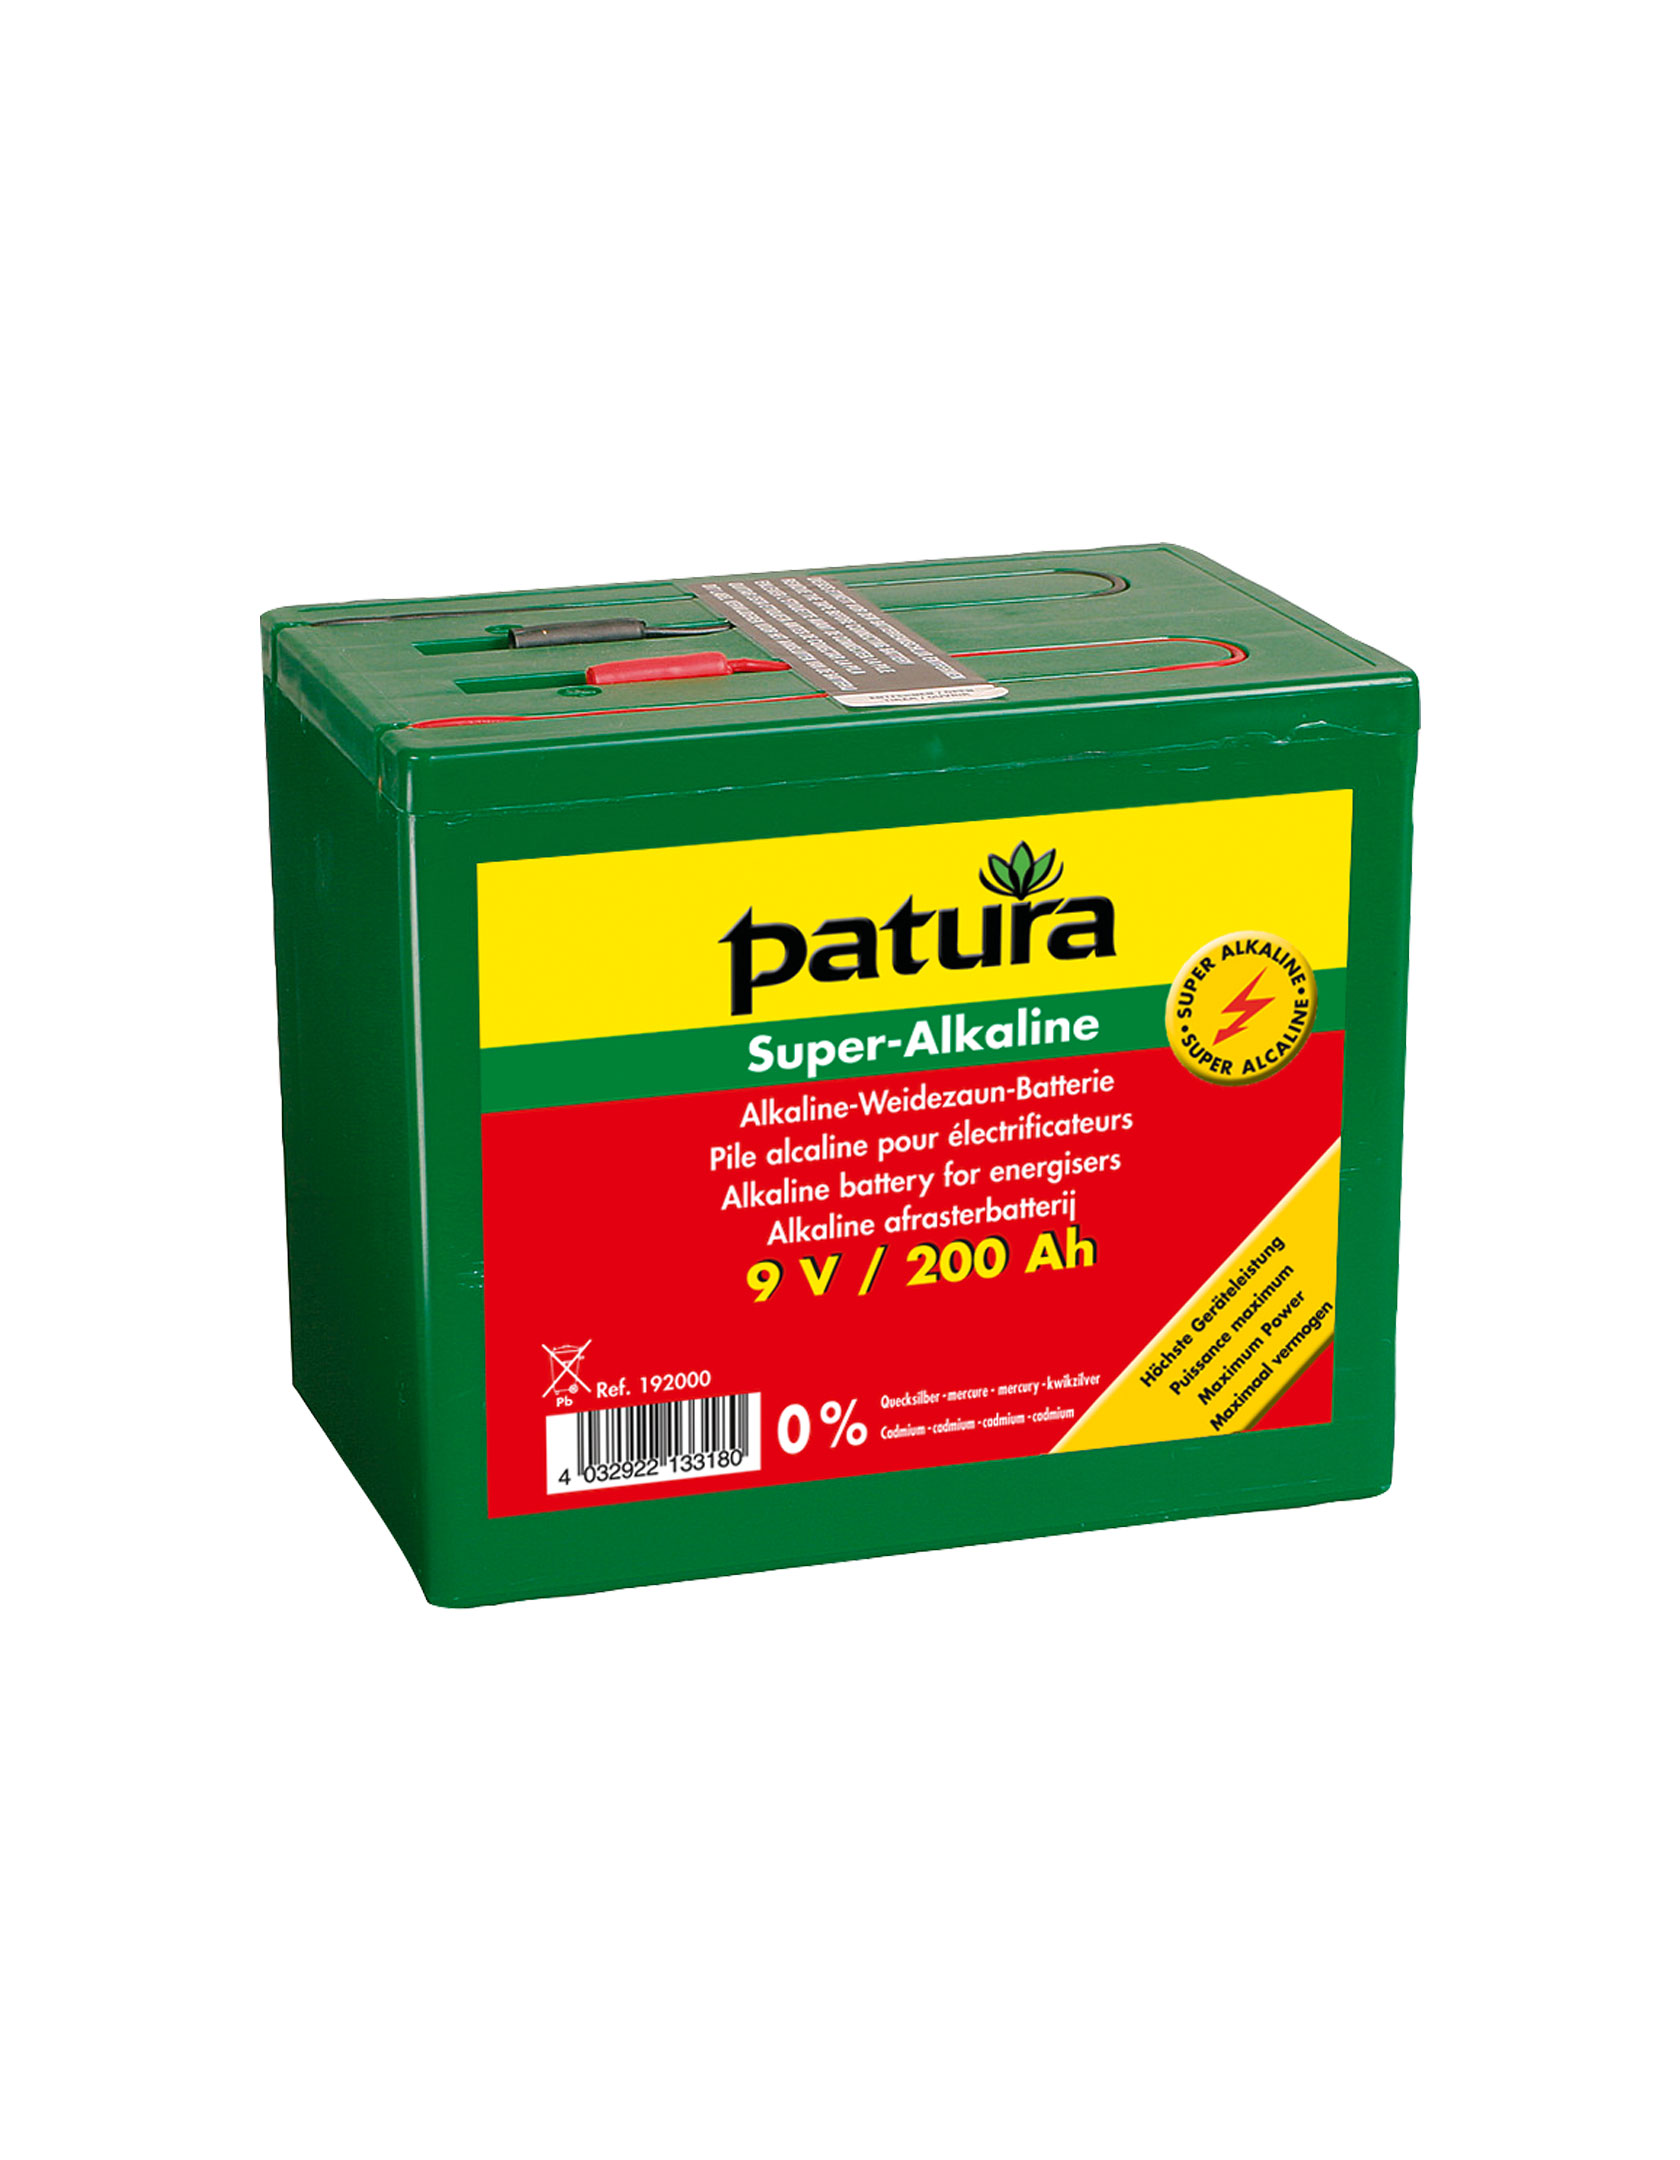 PATURA Super-Alkaline Weidezaun-Batterie 9V